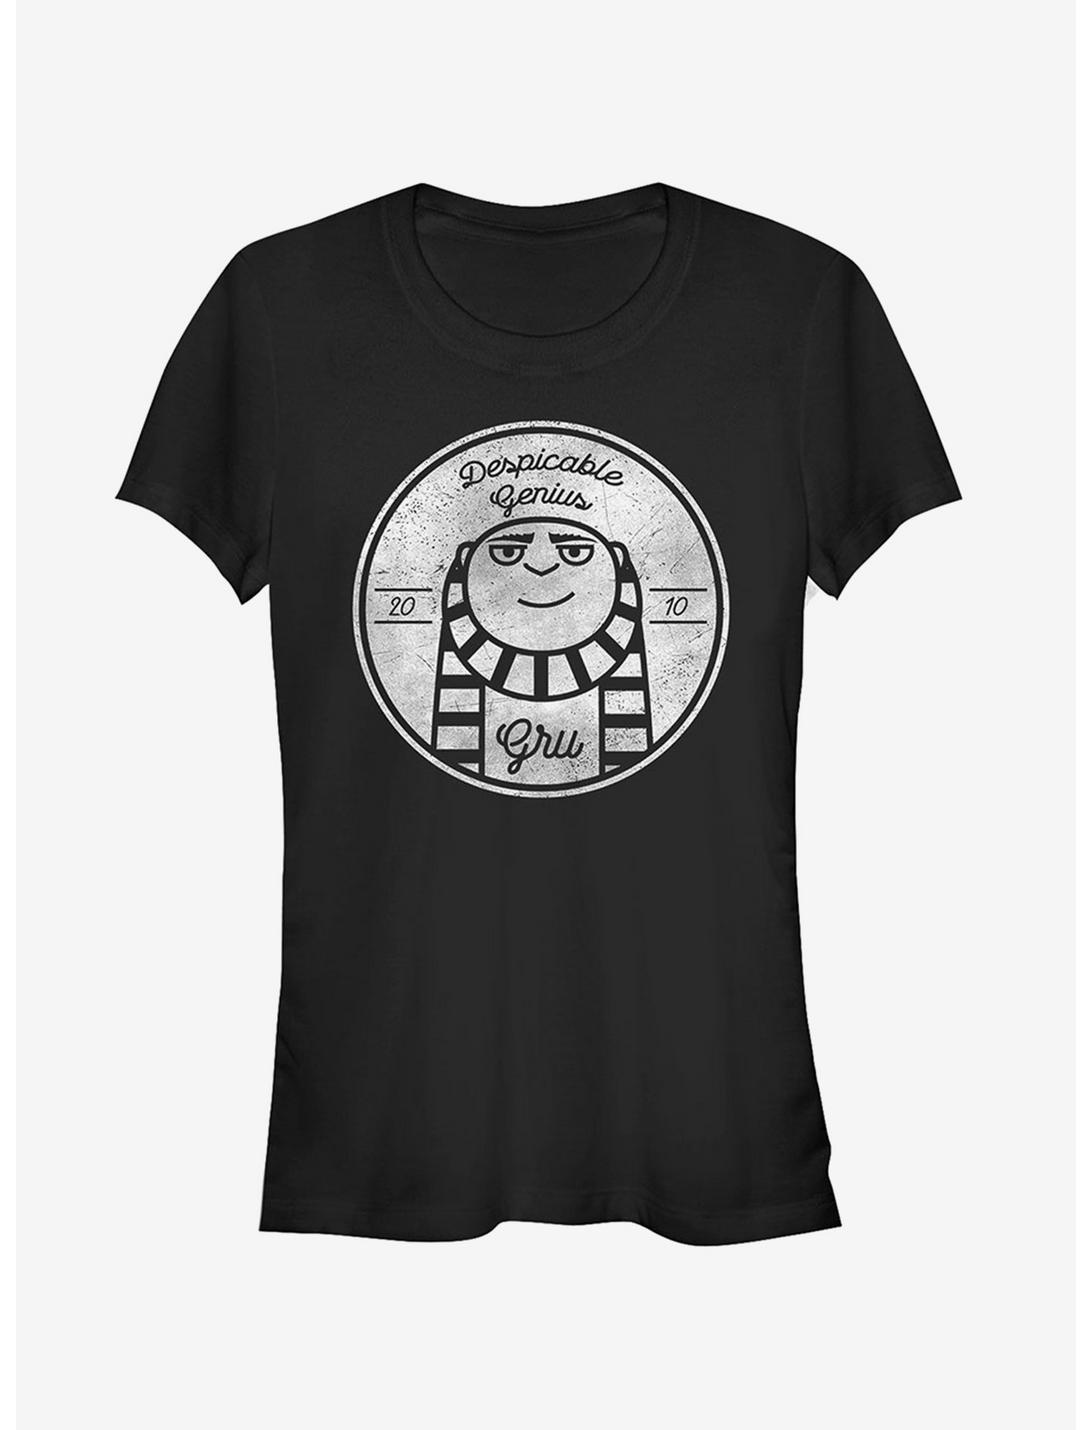 Gru Genius 2010 Girls T-Shirt, BLACK, hi-res